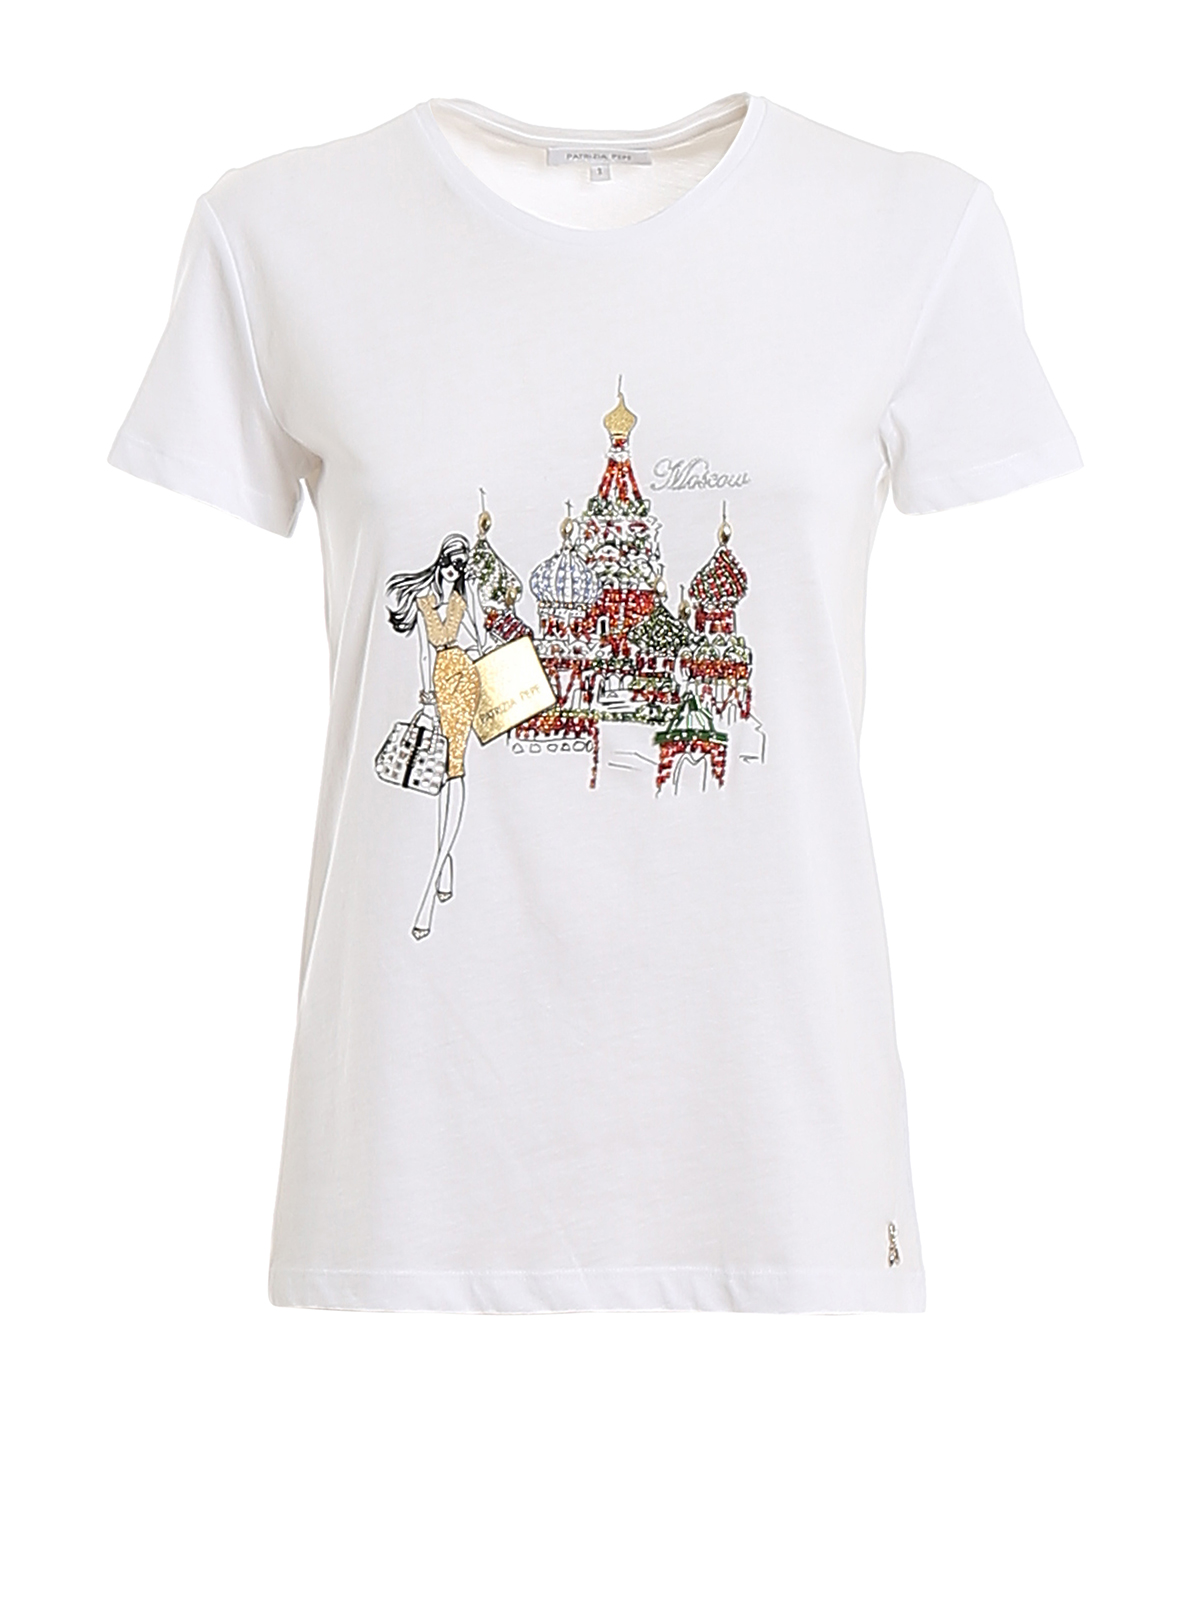 Patrizia Pepe - T-shirt impreziosita da stampa logo Moscow - t-shirt -  8M0796A4S2XU16